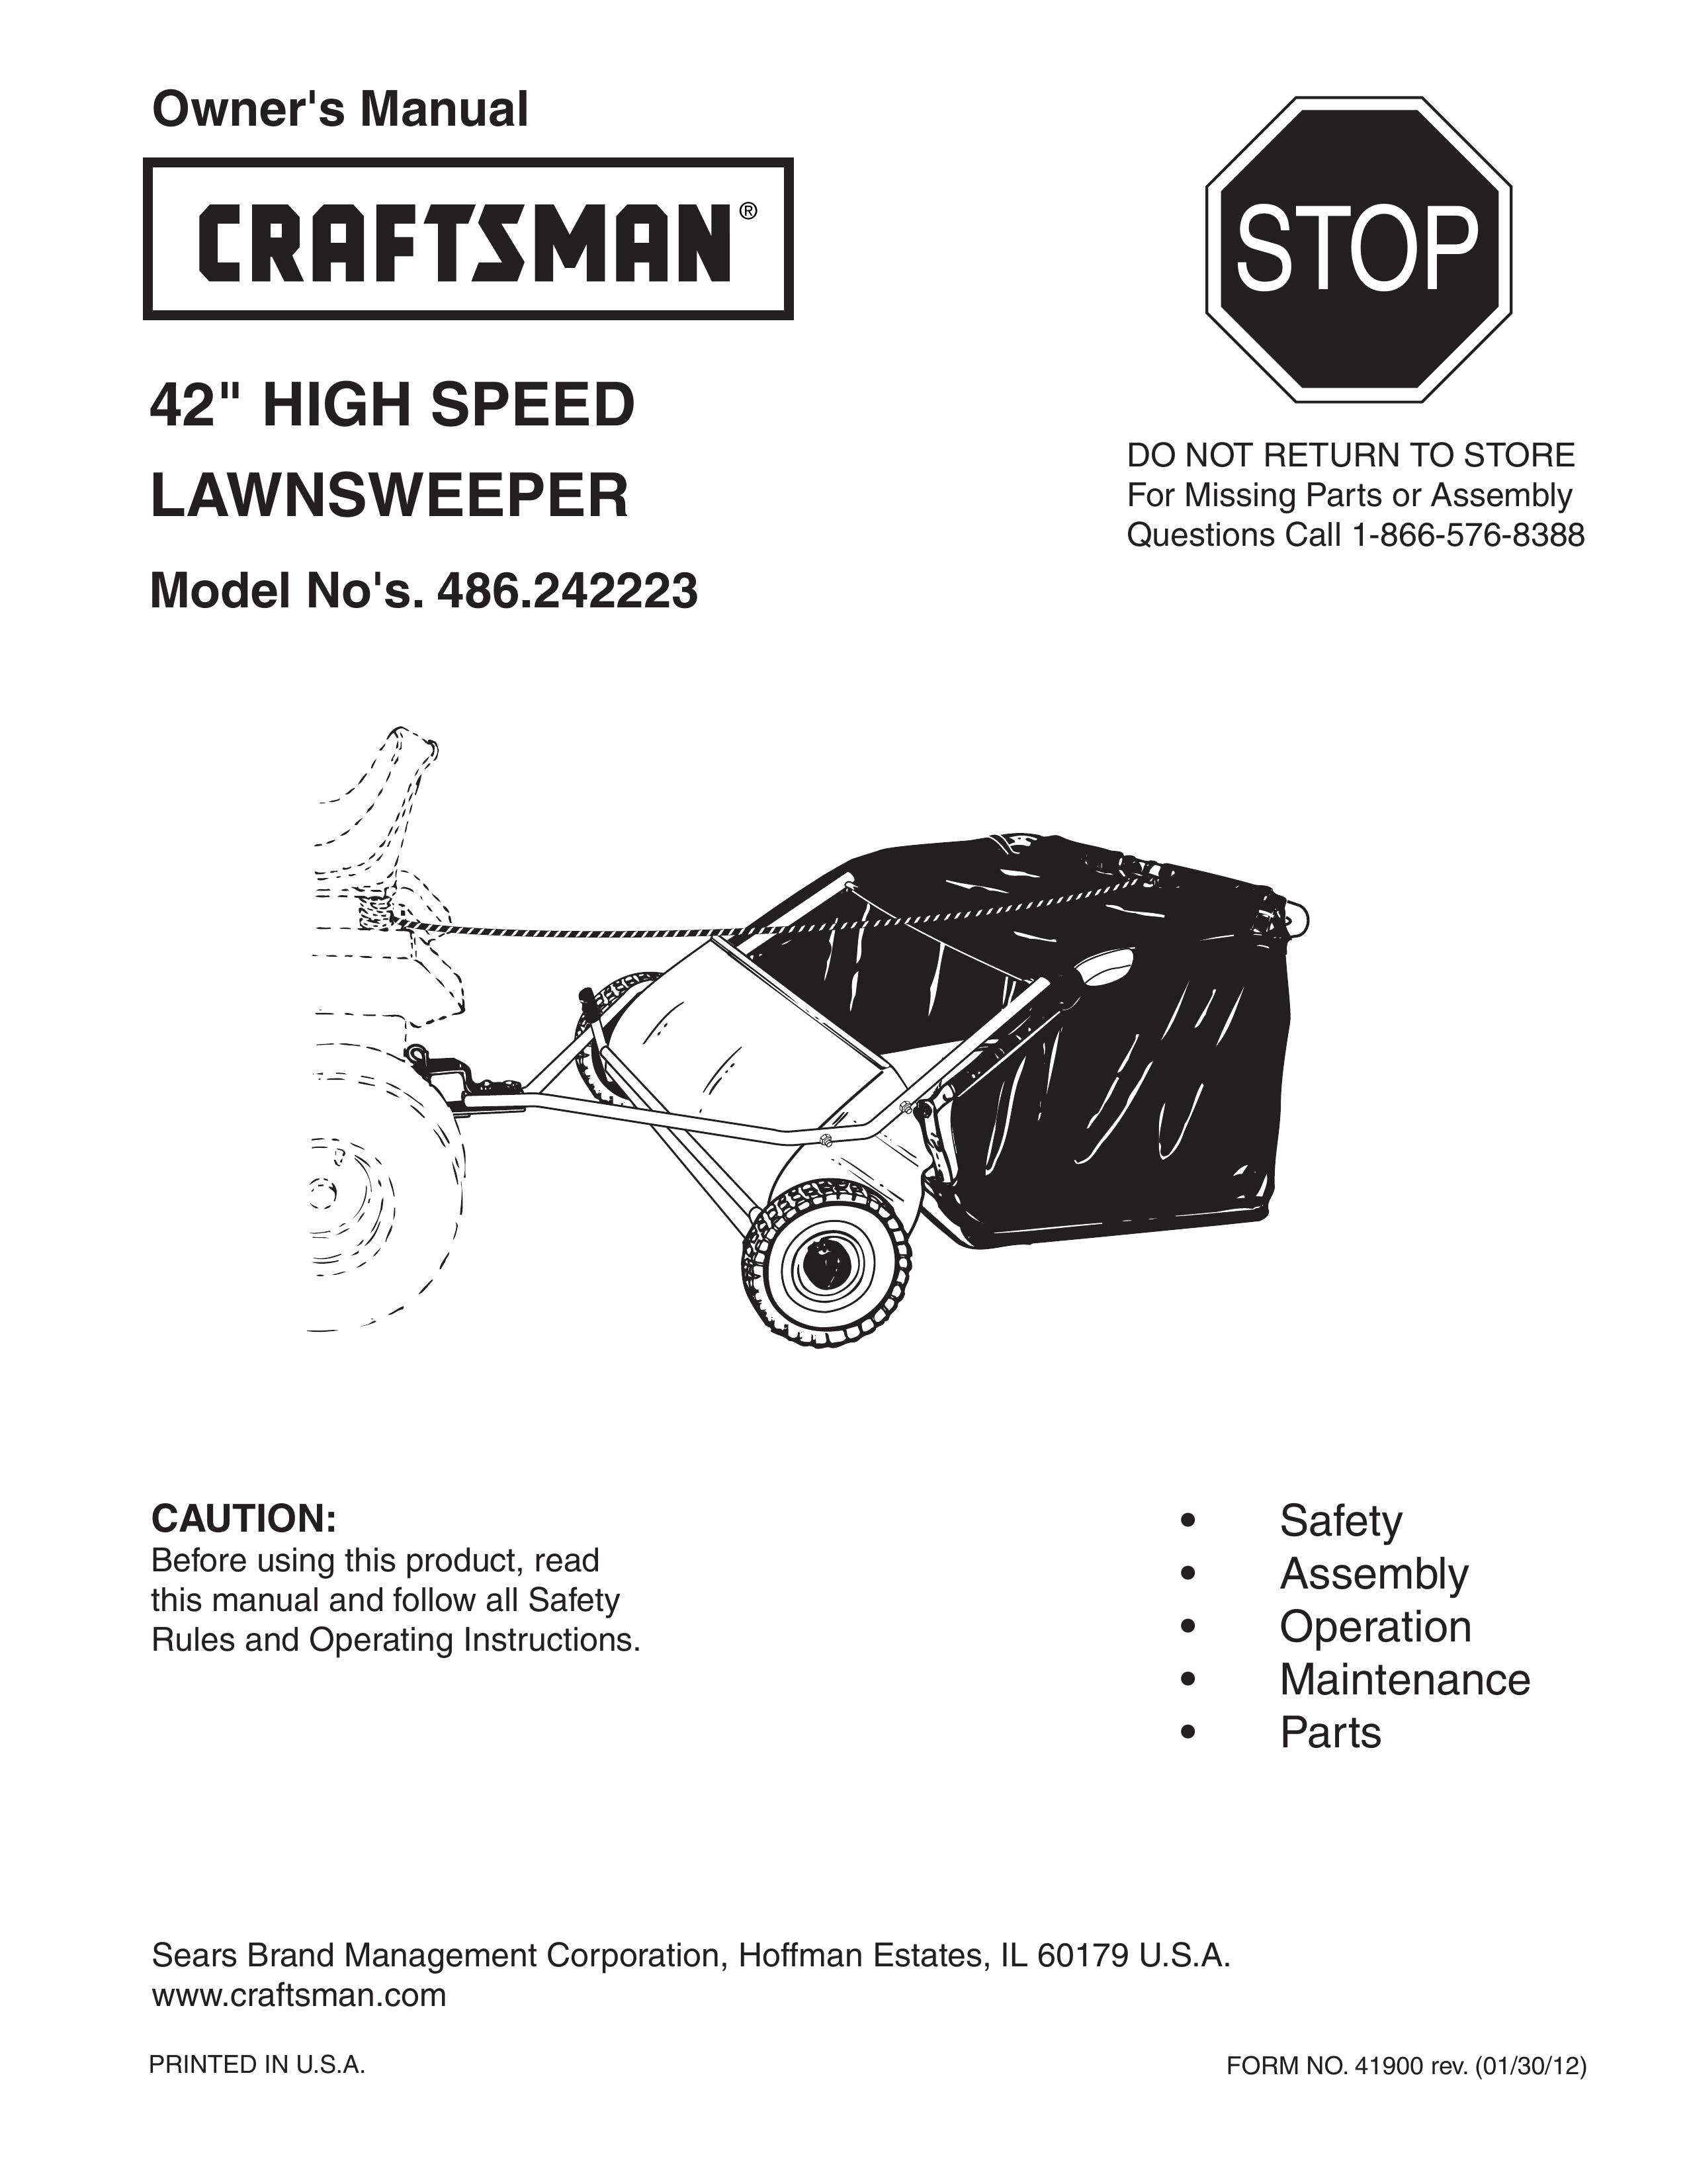 Craftsman 486.242223 Lawn Sweeper User Manual